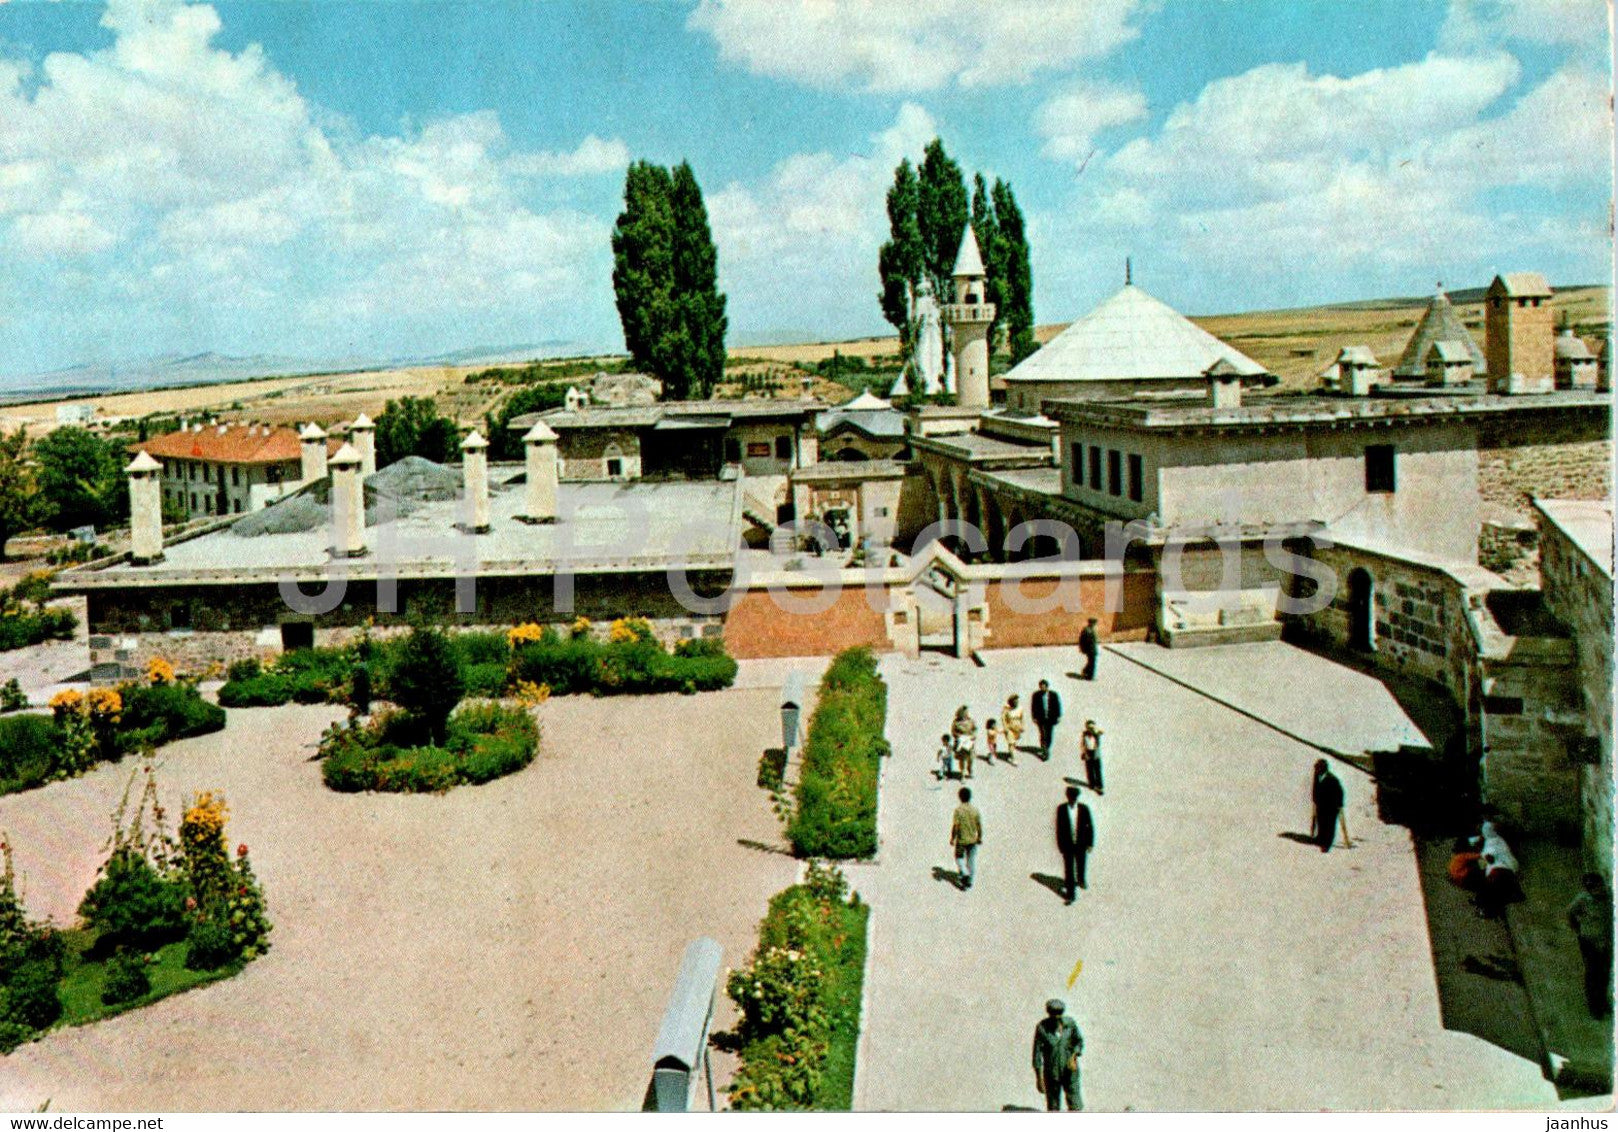 Haci Bektasi Veli'nin Turbe ve Muzesi - Haci Bektas - Nevsehir - Tomb and Museum - 50-20 - Turkey - unused - JH Postcards